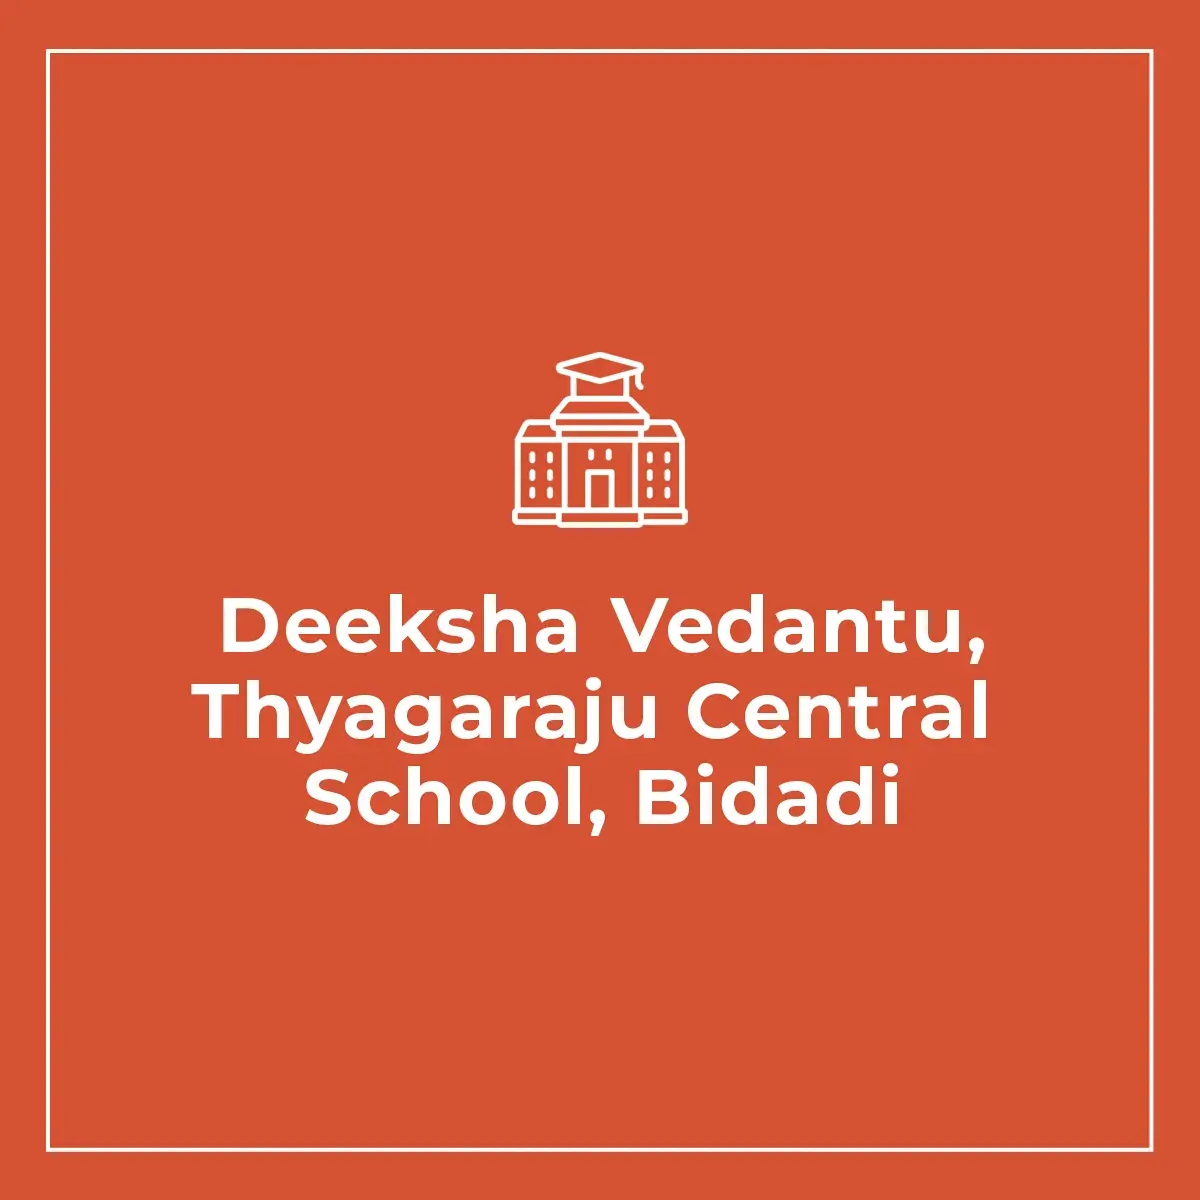 Deeksha Vedantu, Thyagaraju Central School, Bidadi